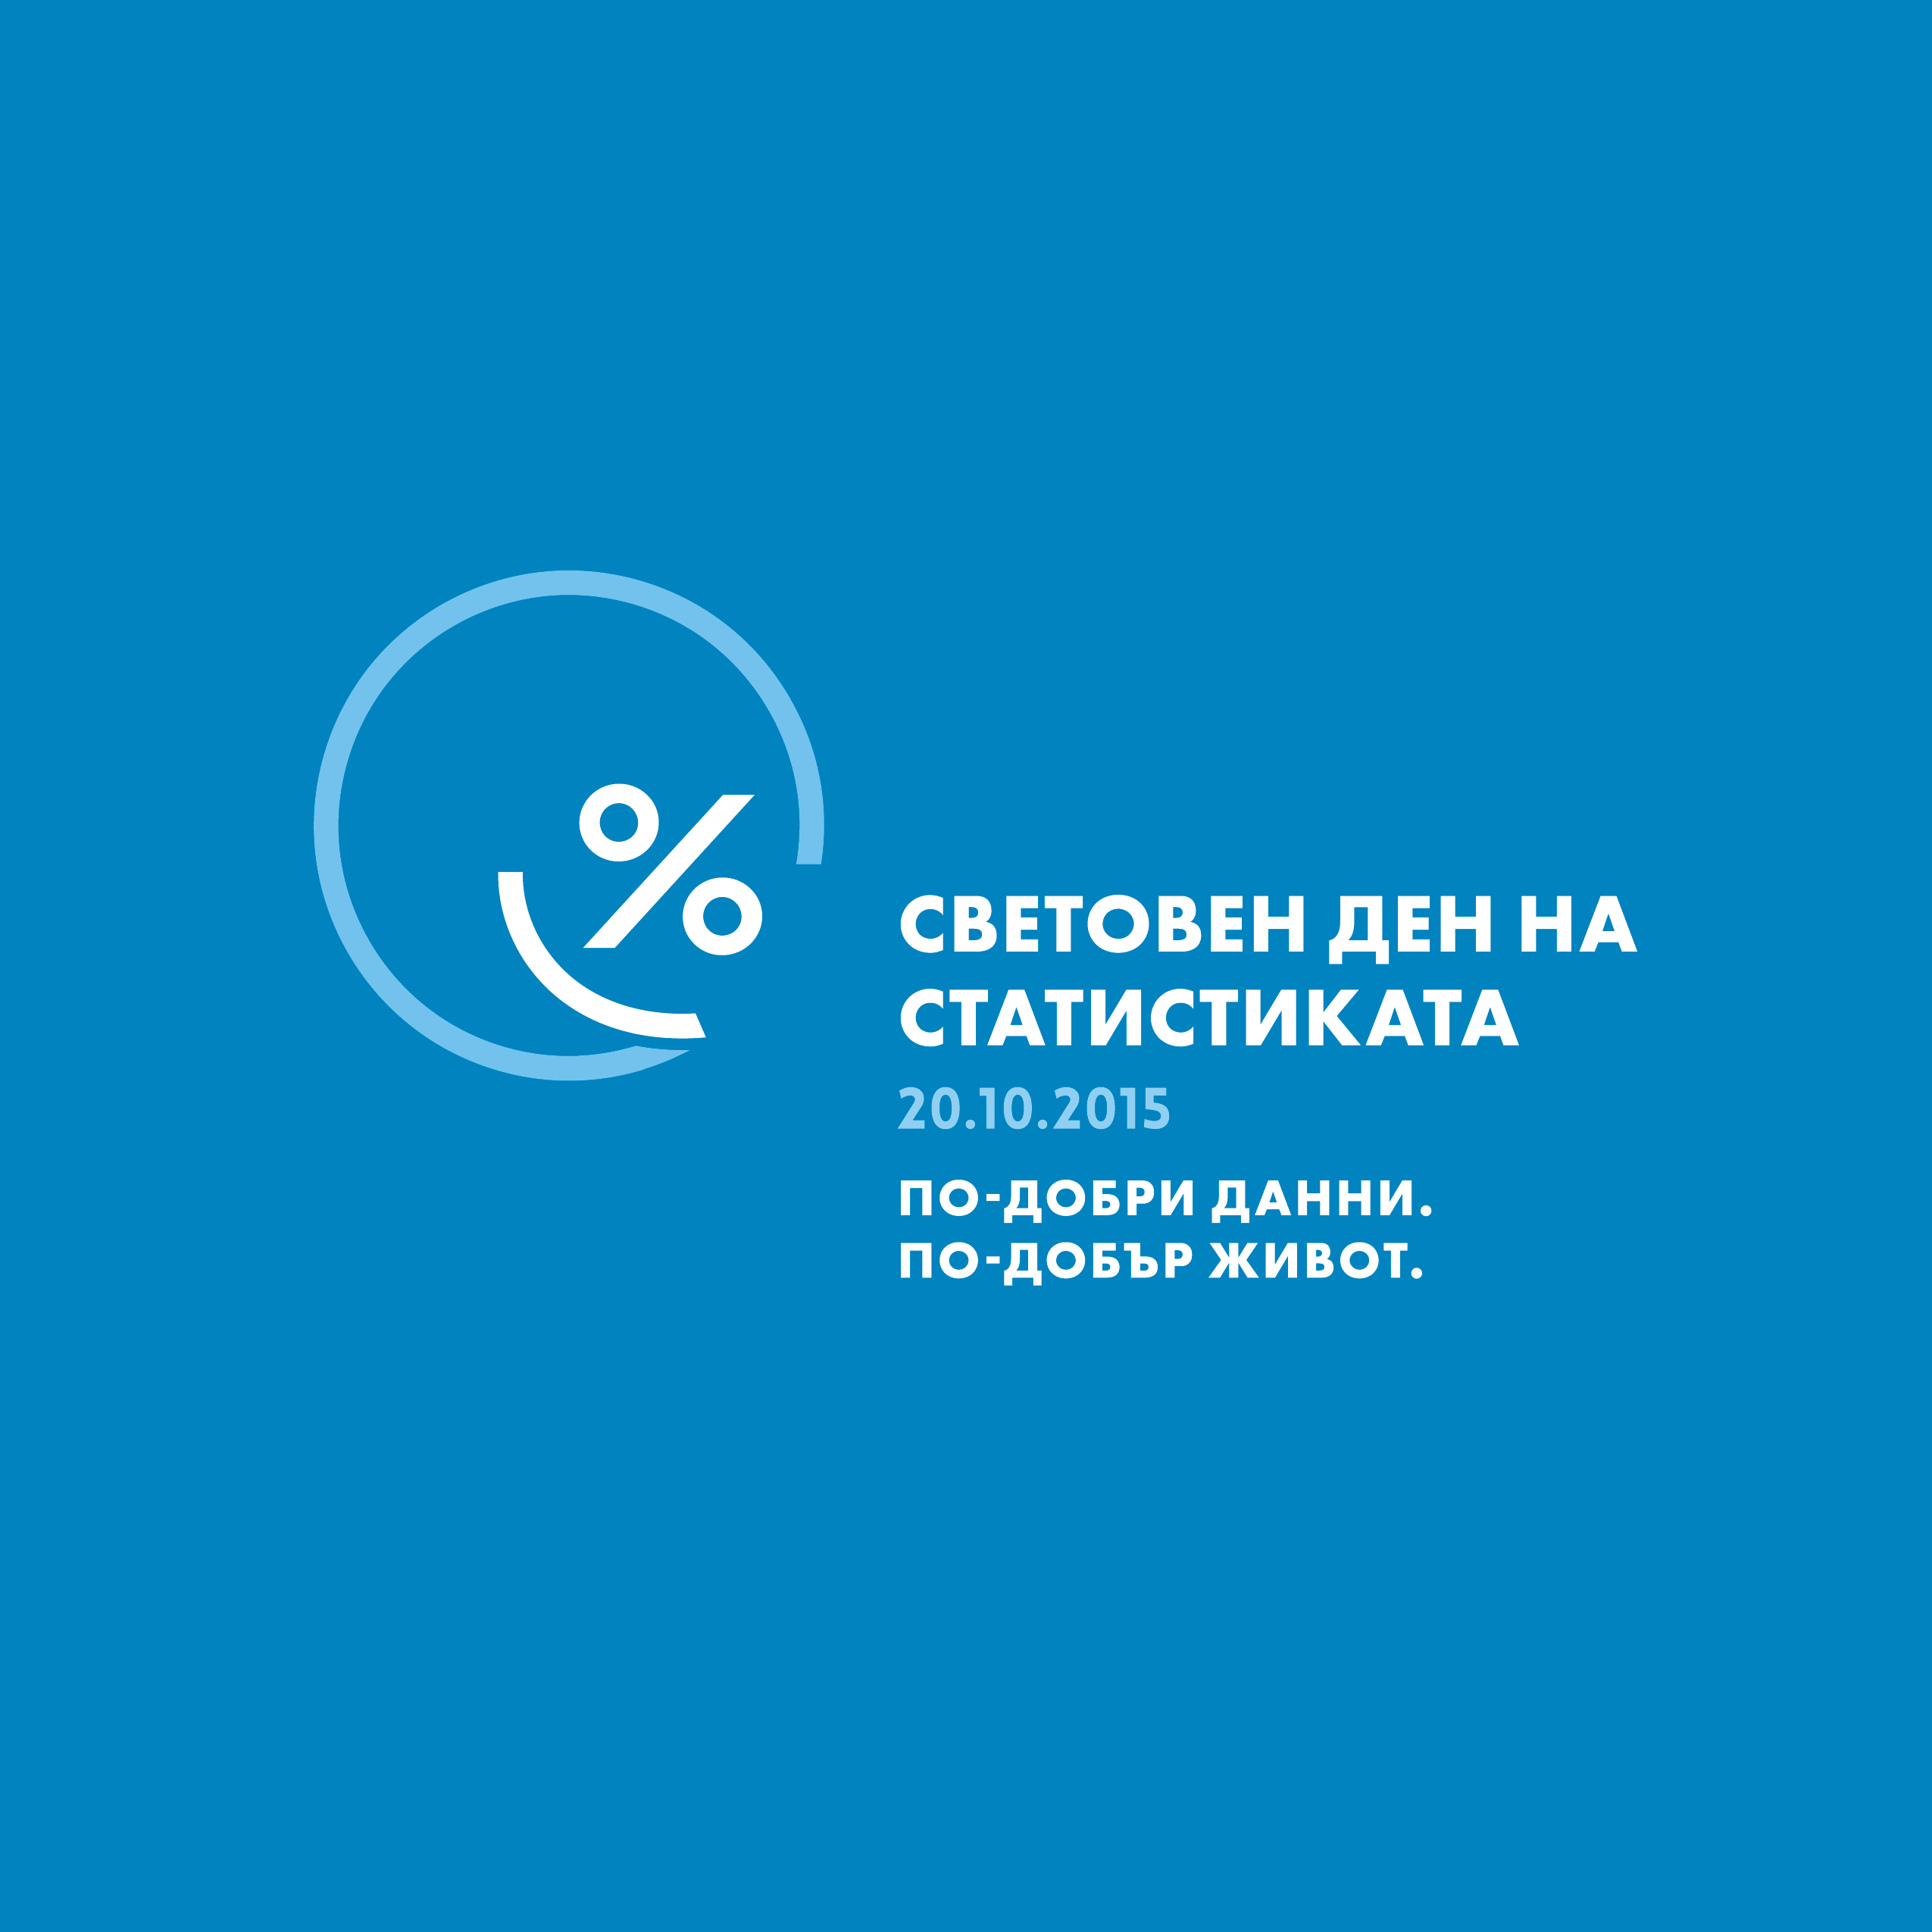 World Statistics Day Logo in Bulgarian